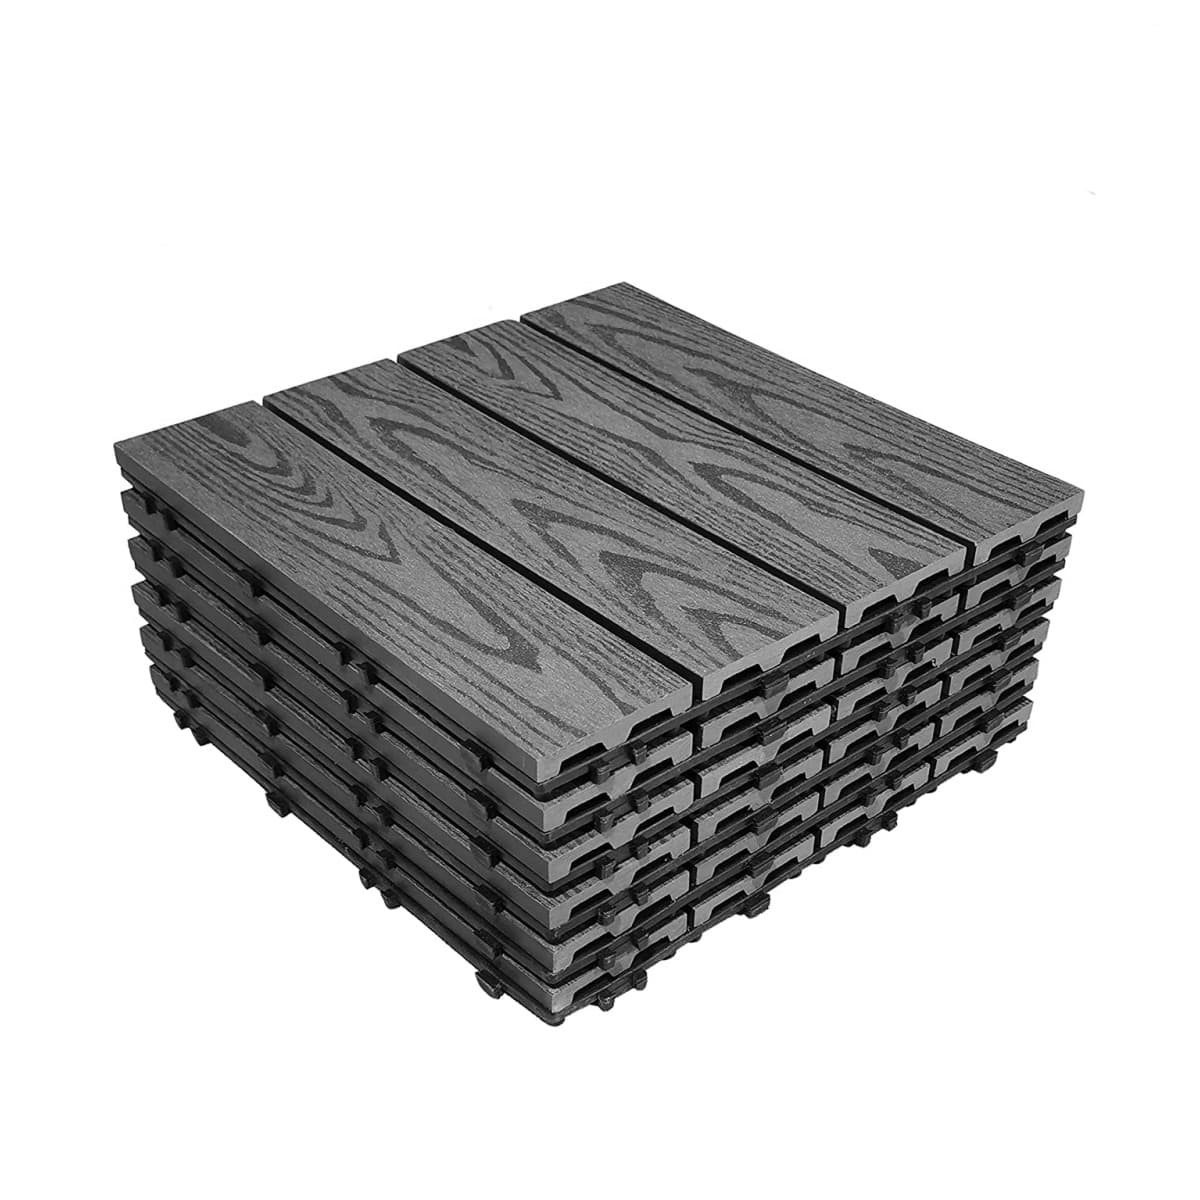 Tercel 300*300*20mm Mold-proof Anti-decay WPC Interlocking Composite Decking Best Composite Deck Tiles